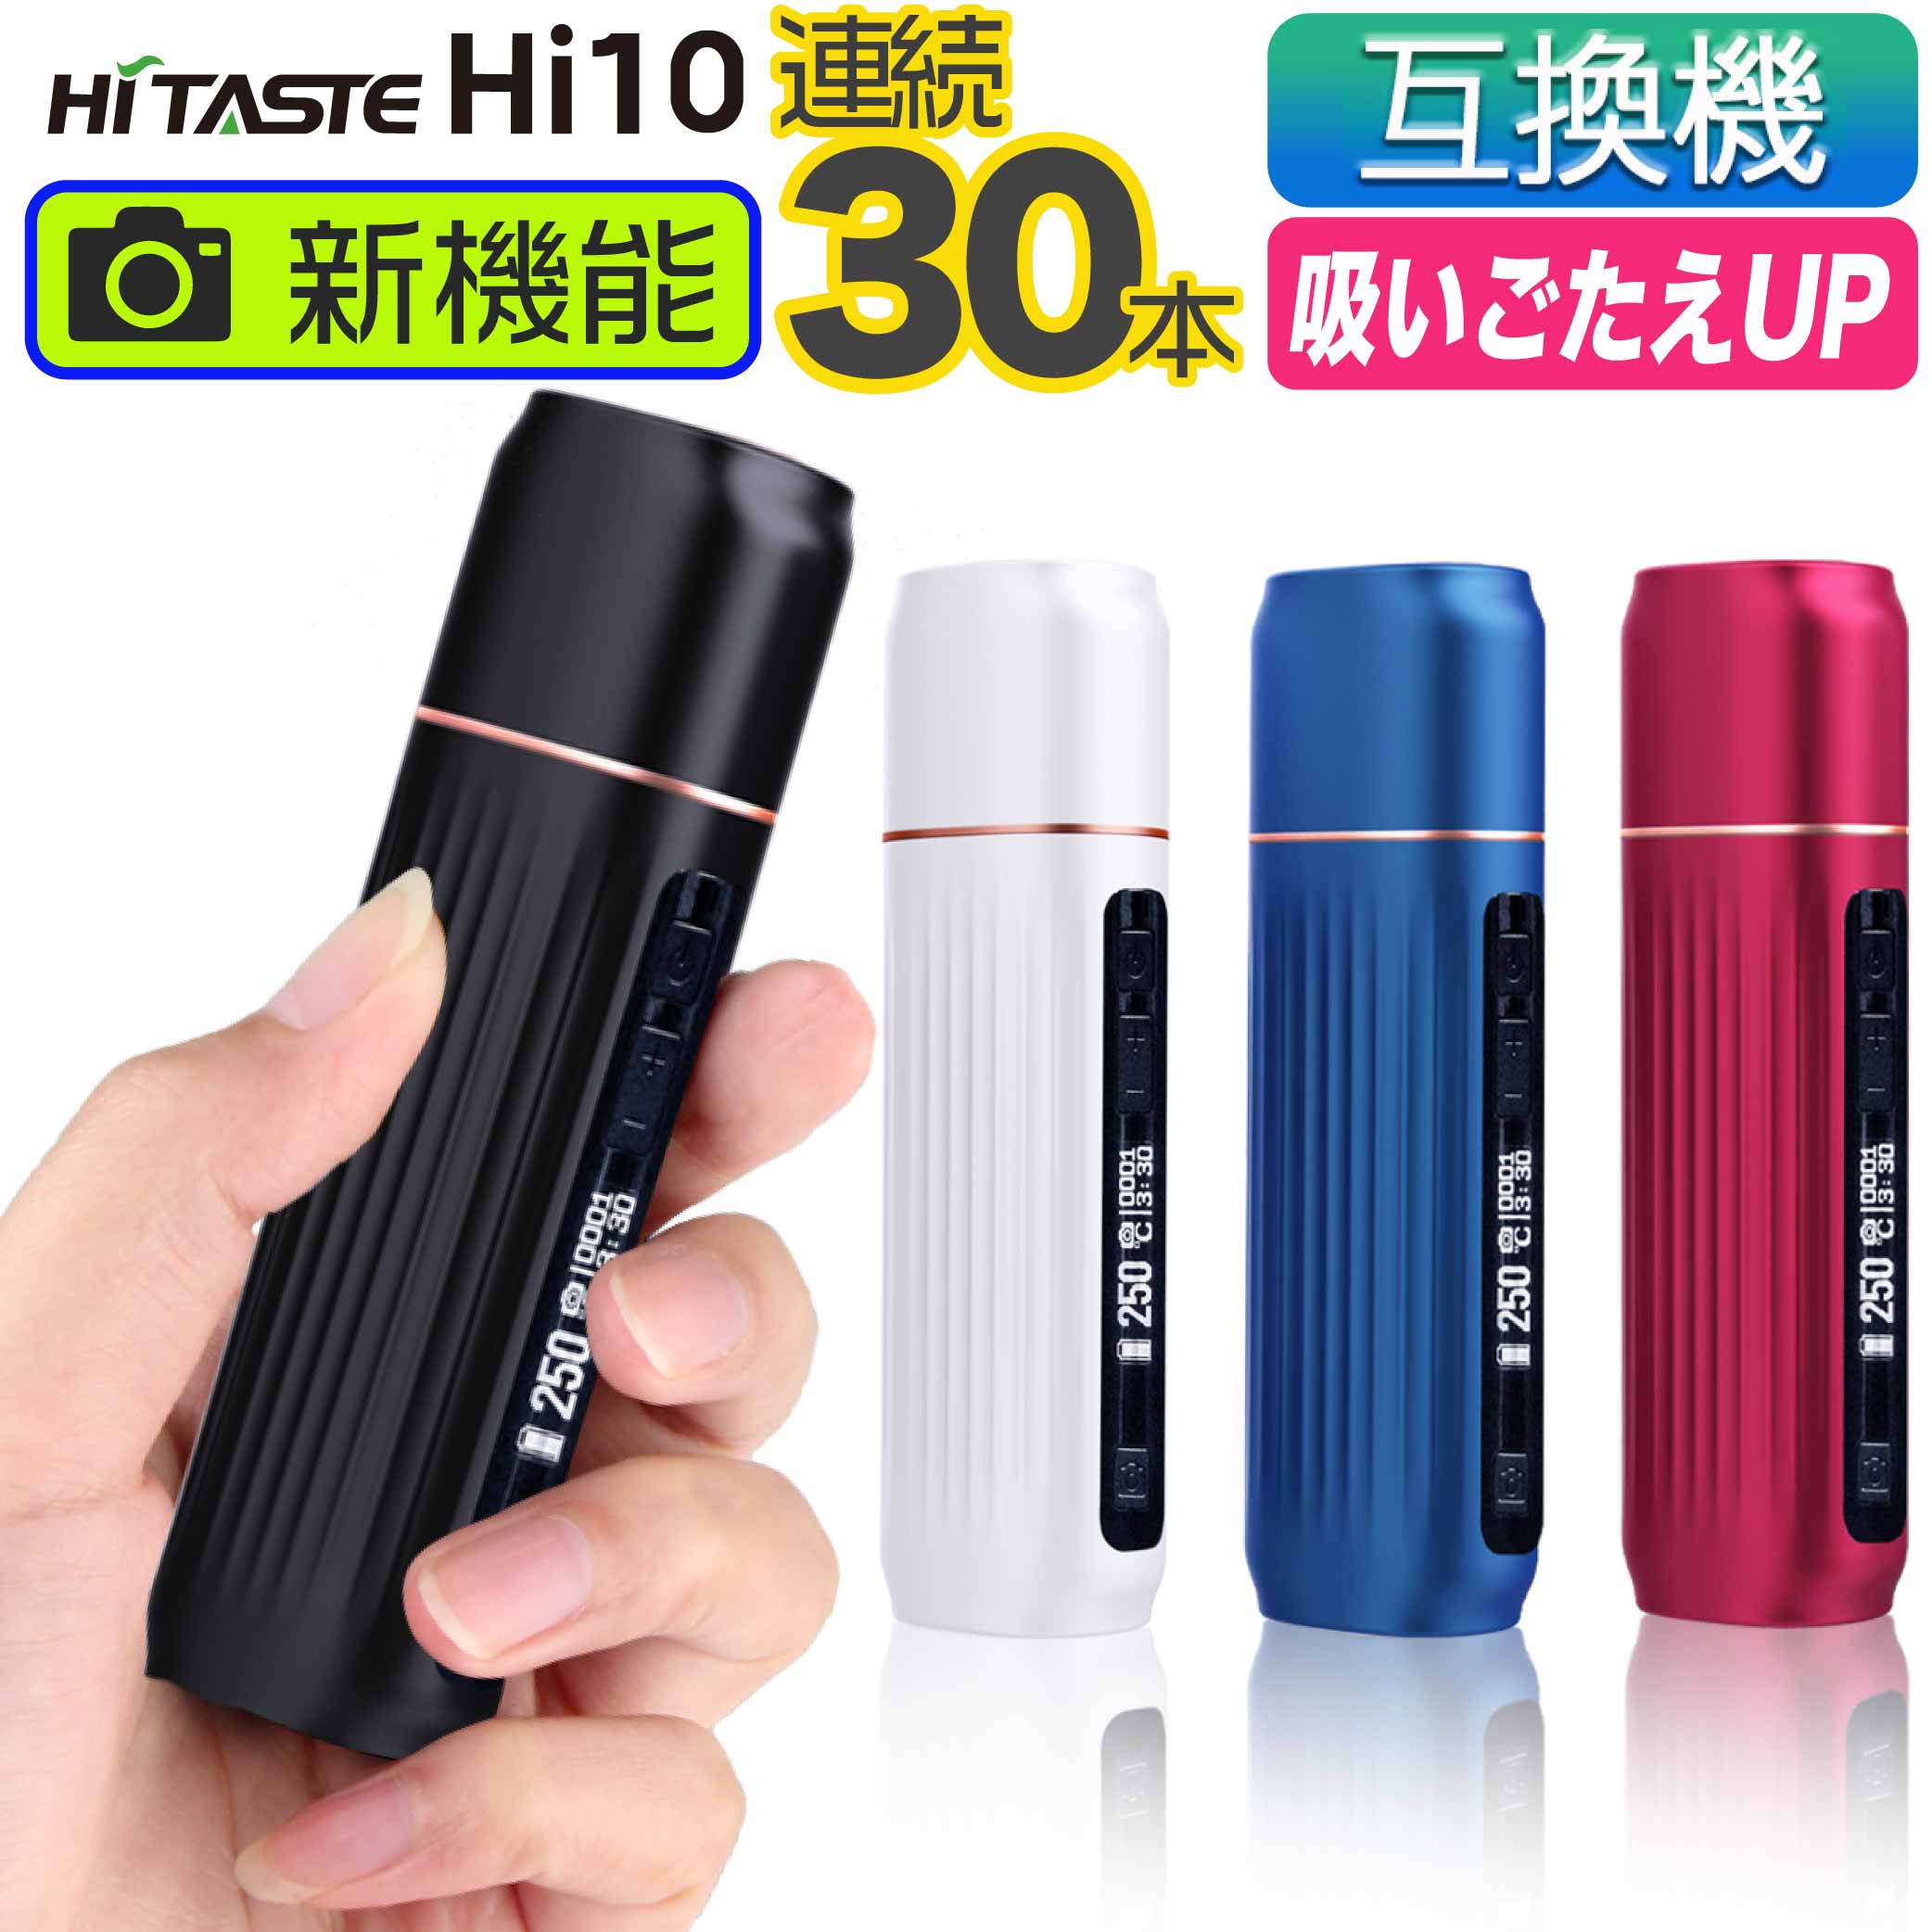 HITASTE Hi10 アイコス互換機 iQOS互換機 本体 加熱式タバコ 加熱式電子タバコ 電子タバコ ハイテイスト ハイテン S9…